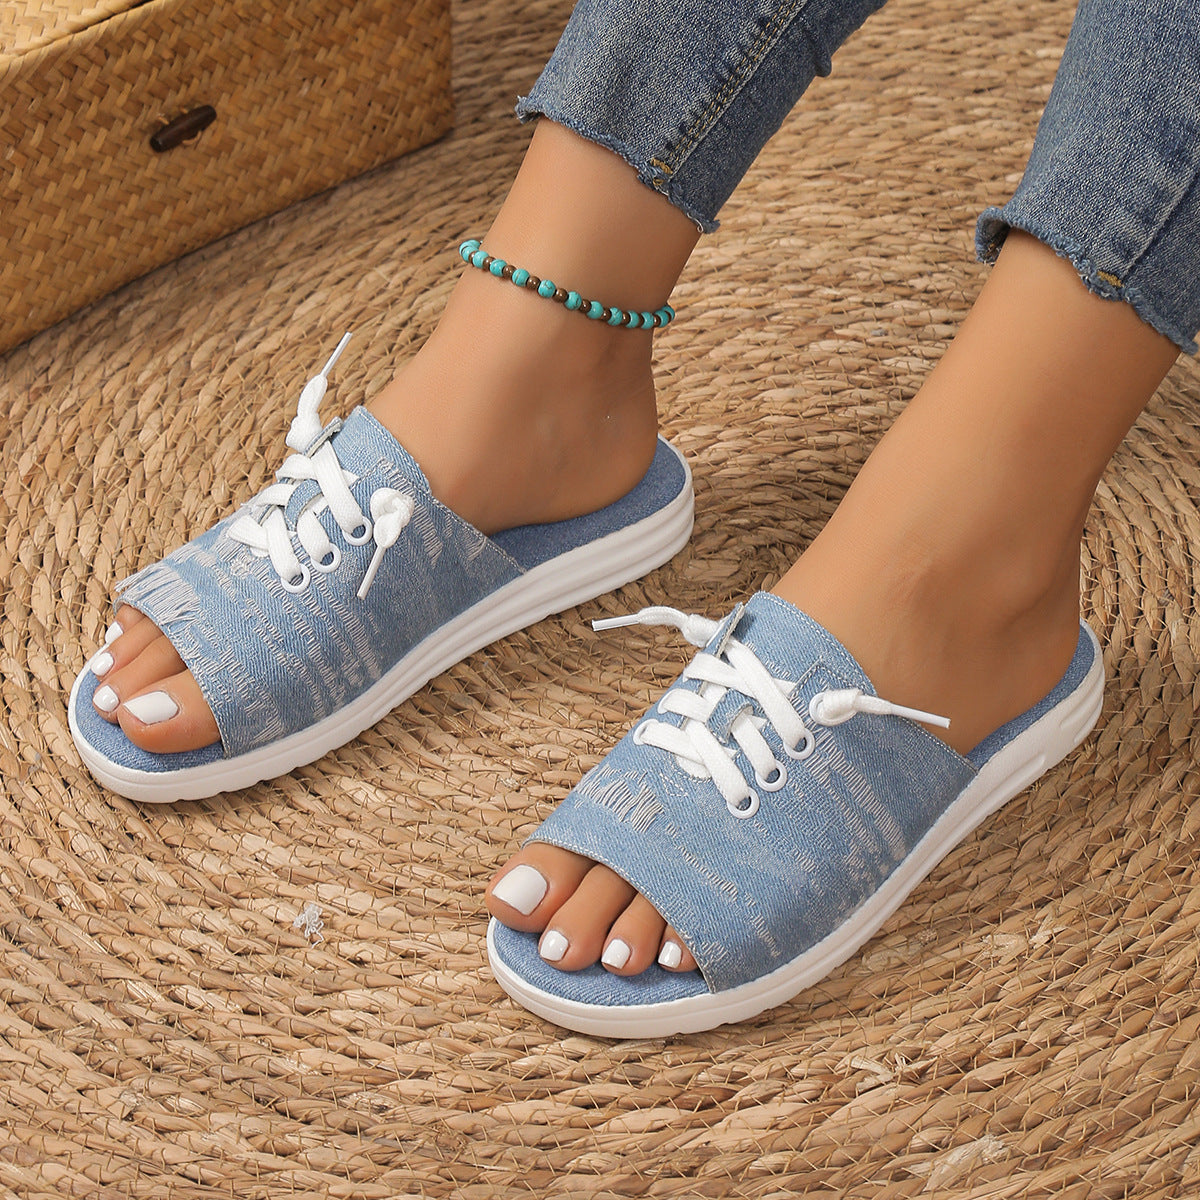 Plus Size Women's Canvas Sandal Slippers Simple Style